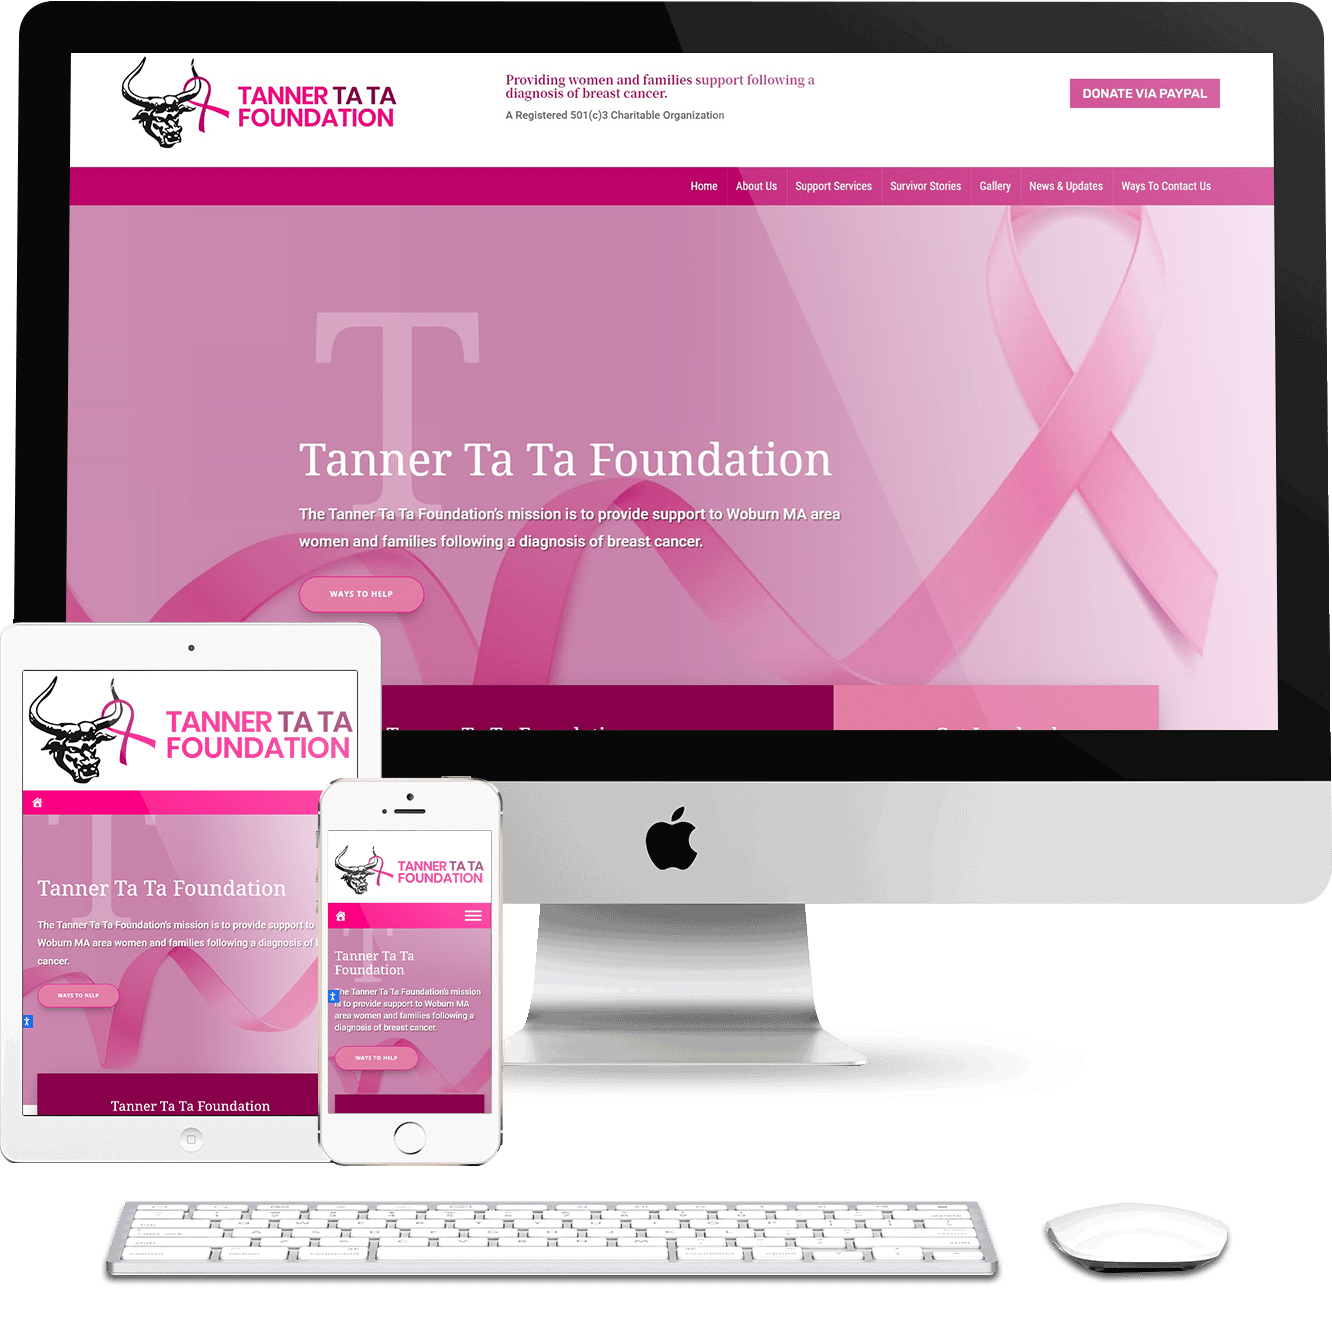 The Tanner Ta Ta Foundation